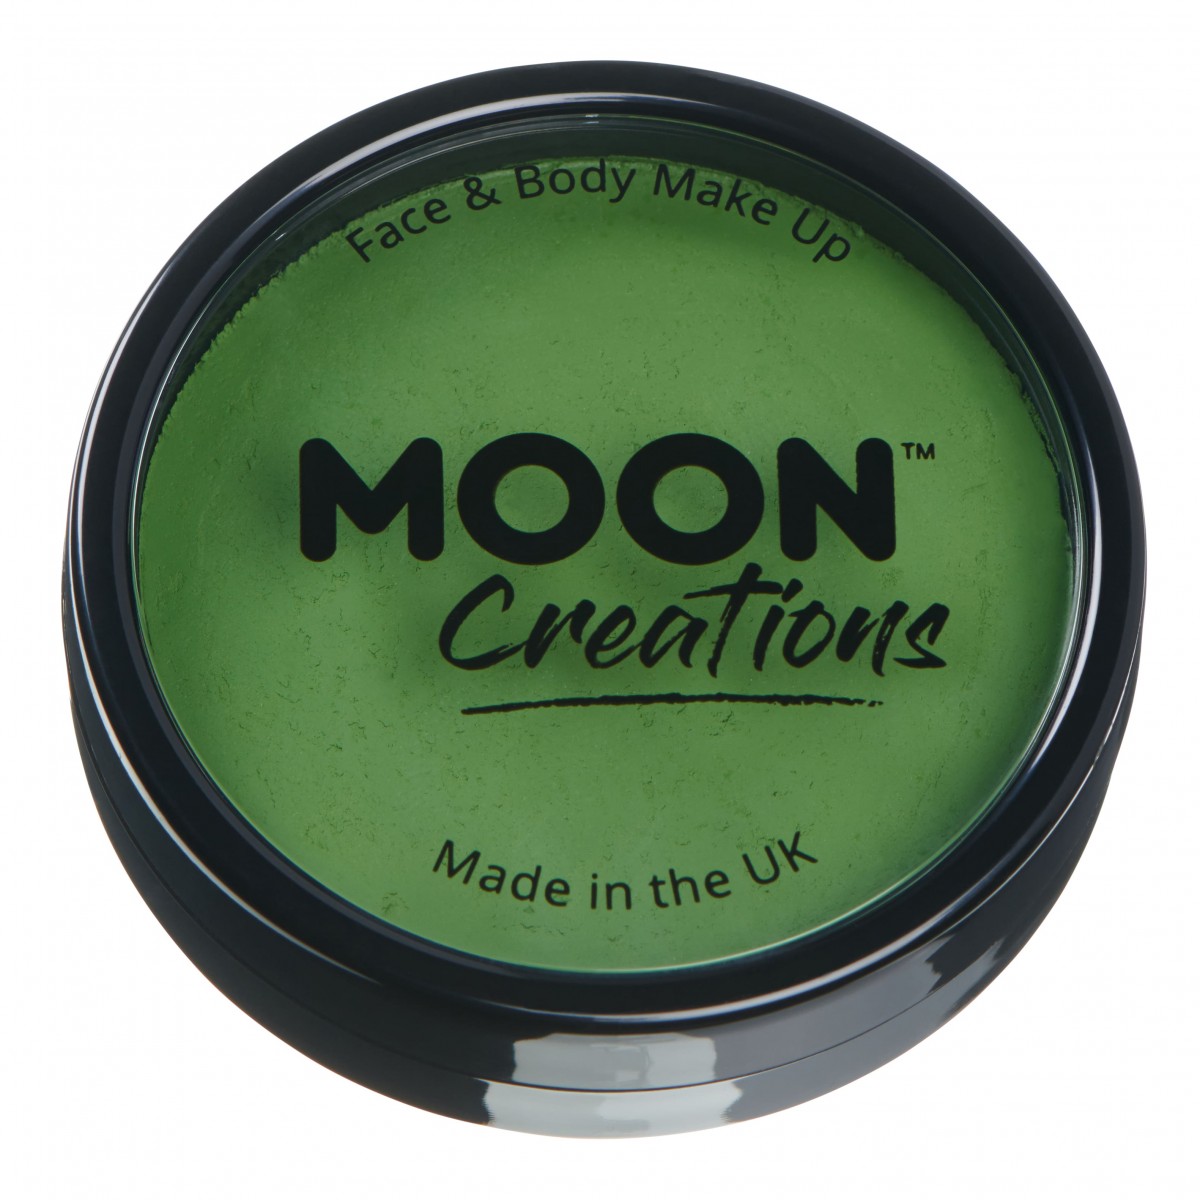 MOON CREATIONS C1 FACE & BODY CAKE MAKEUP GRASS GREEN 36g